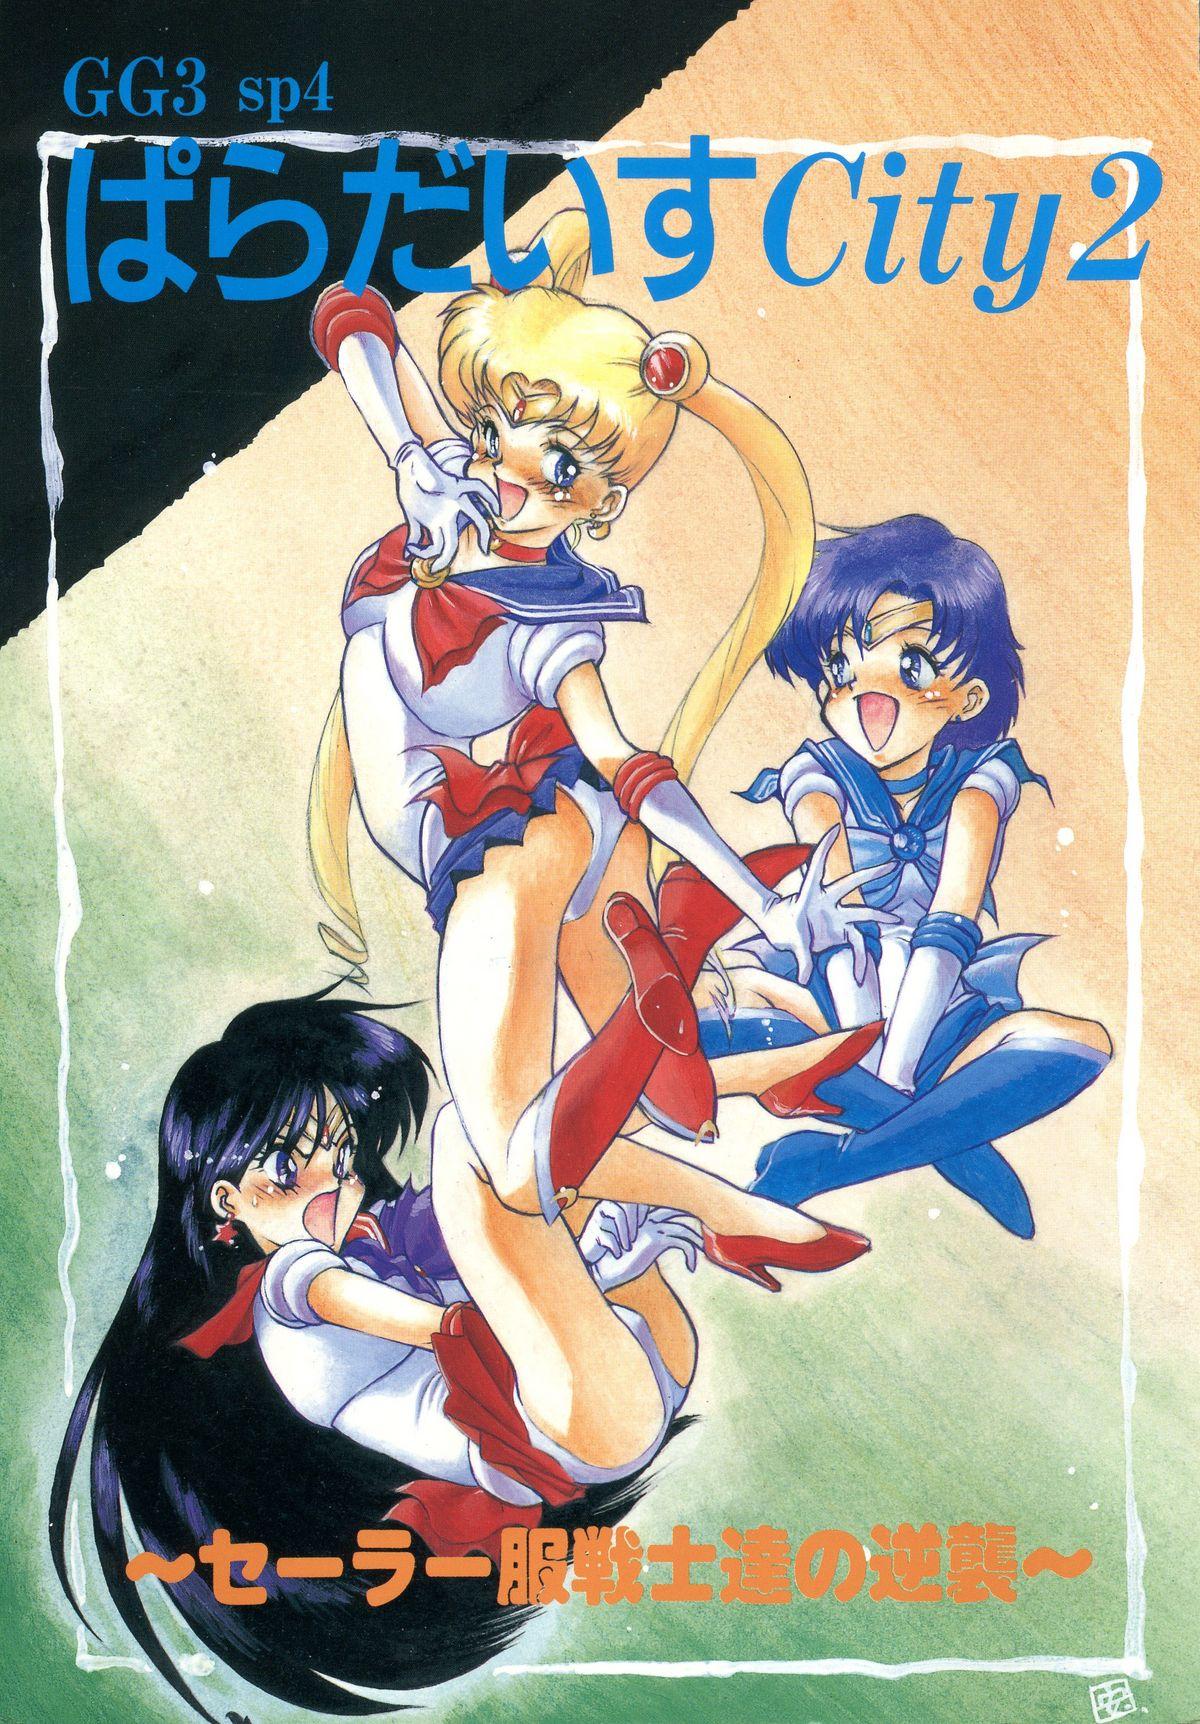 Village GG3 SP 4 - Paradise City 2 - Sailor moon Small Boobs - Page 1